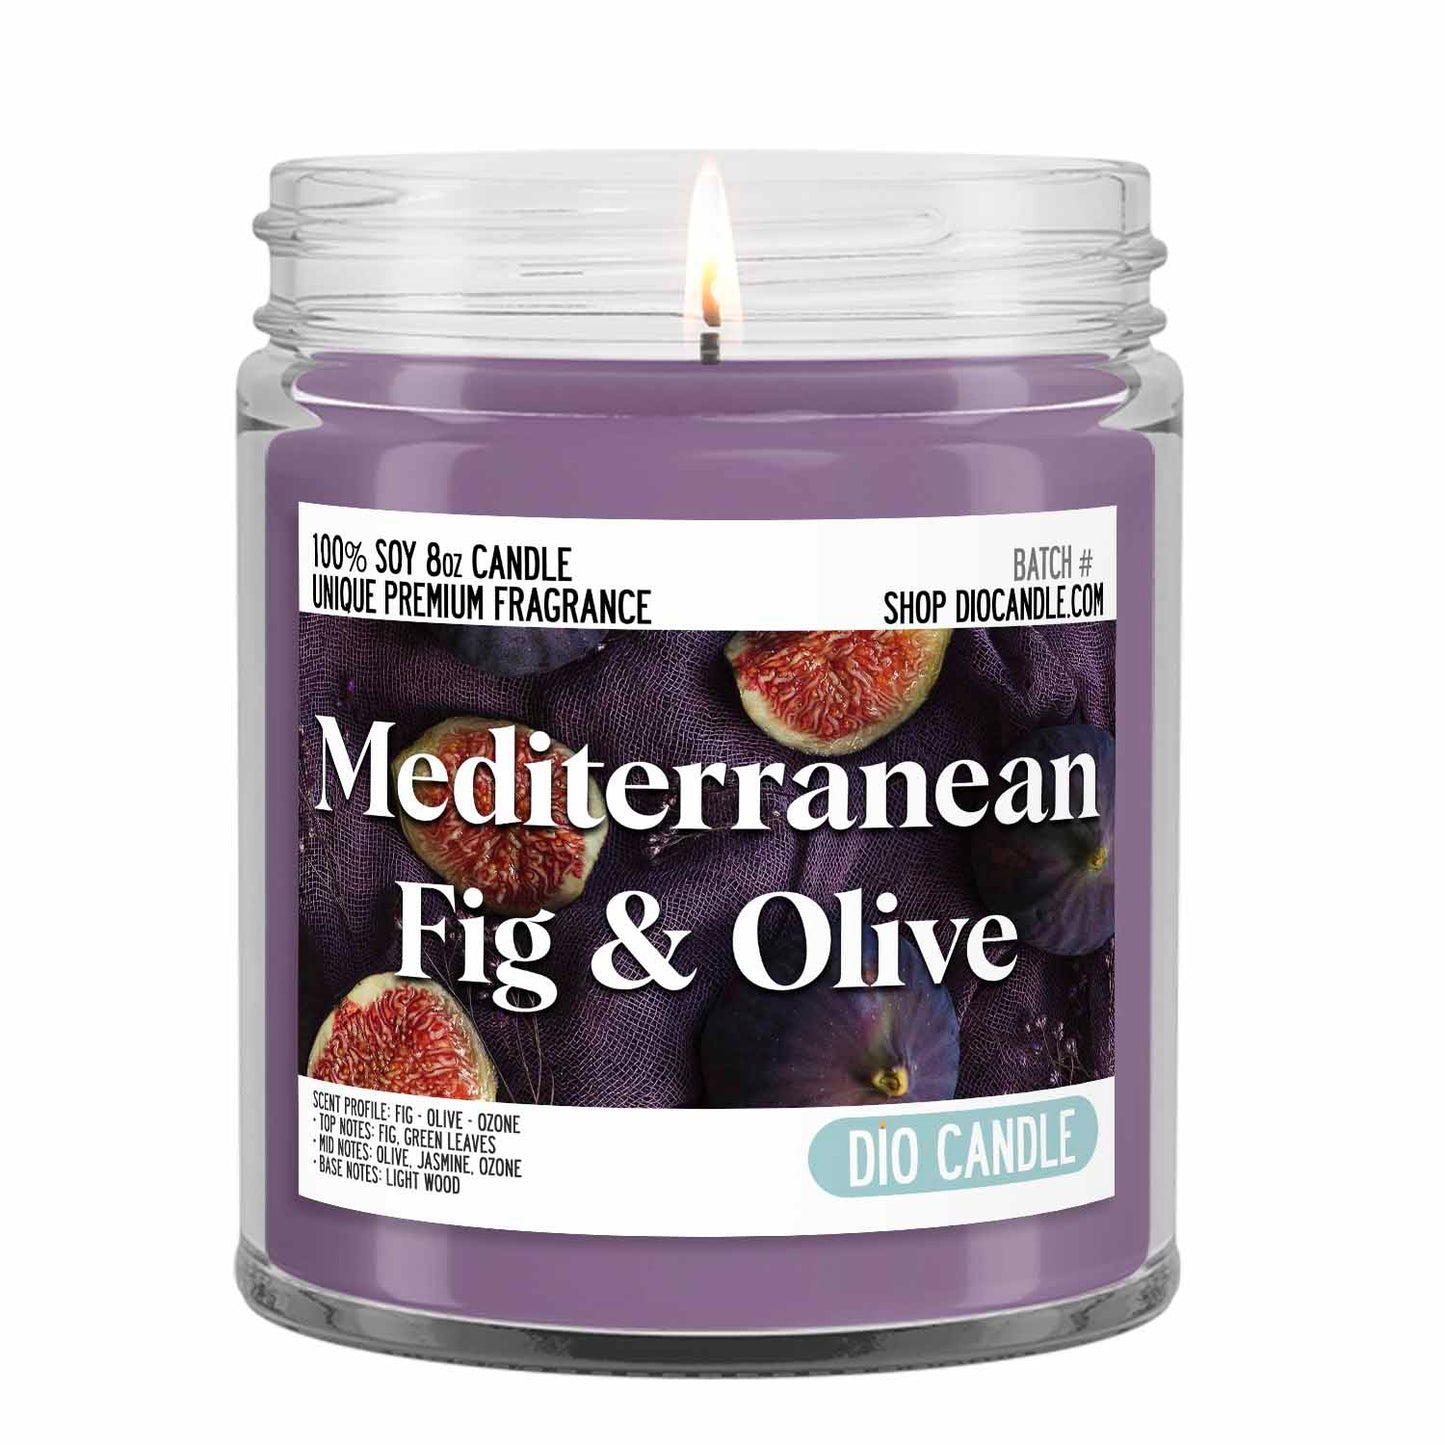 Mediterranean Candle